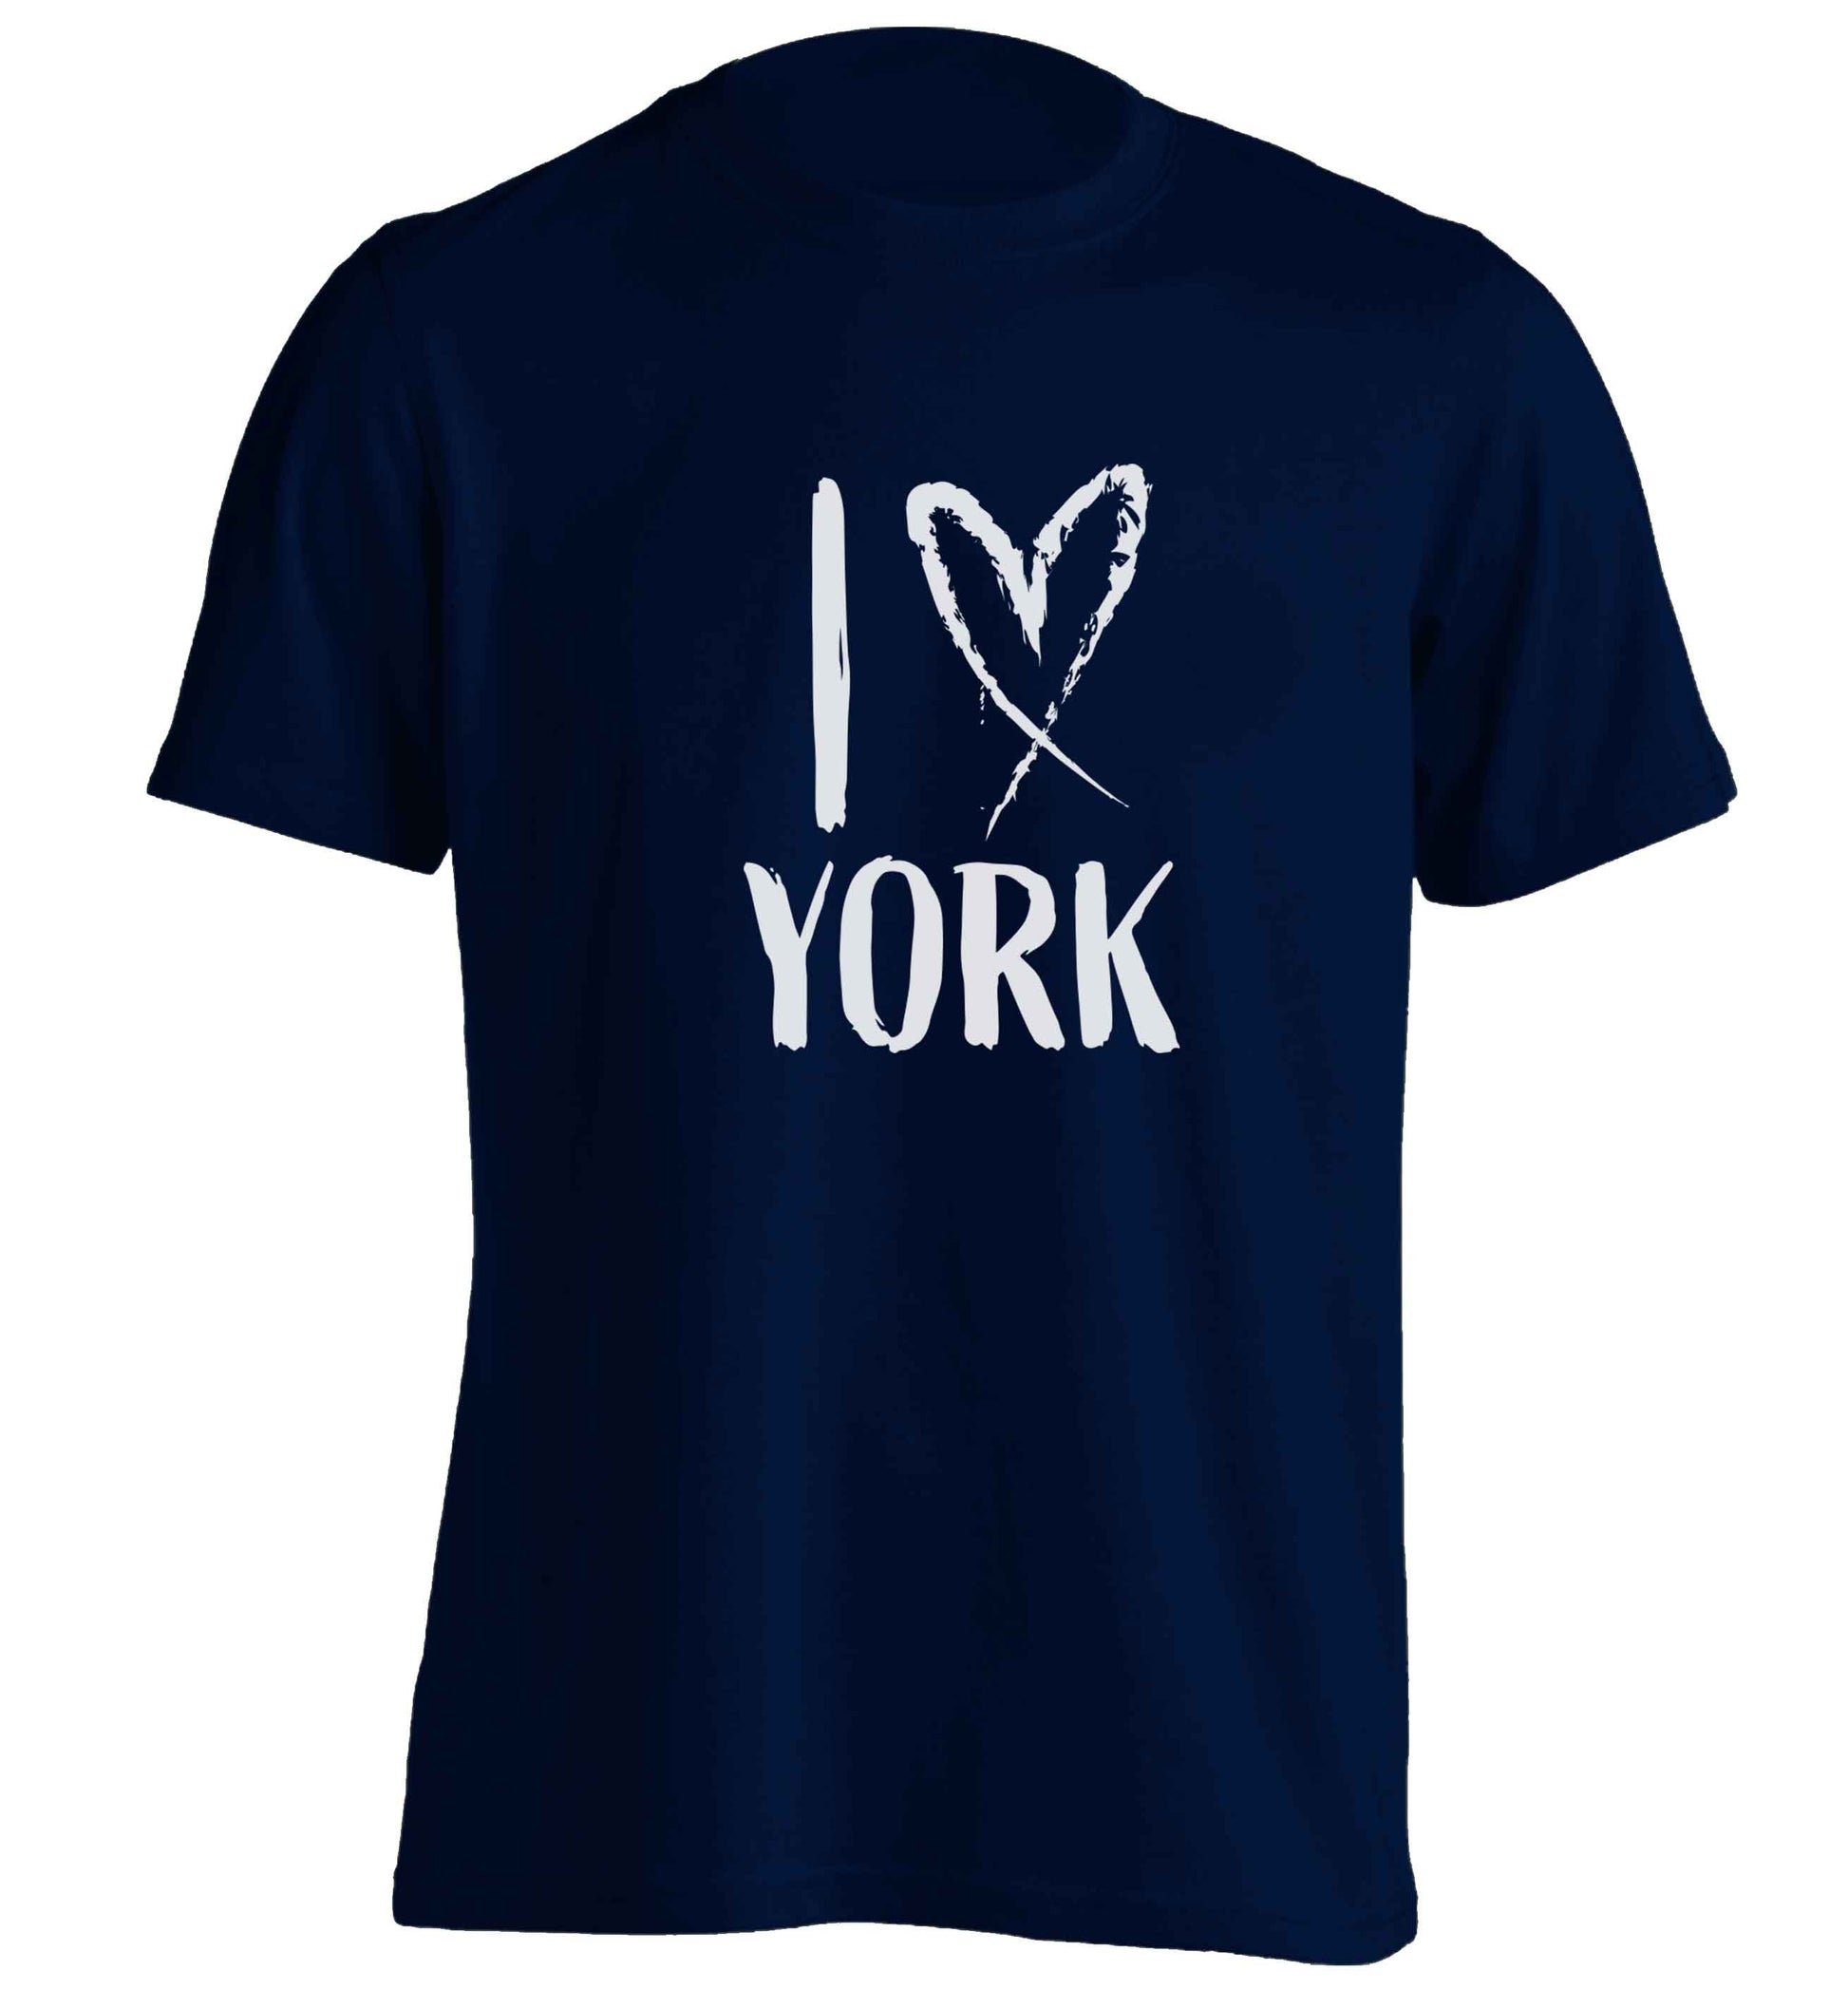 I love York adults unisex navy Tshirt 2XL